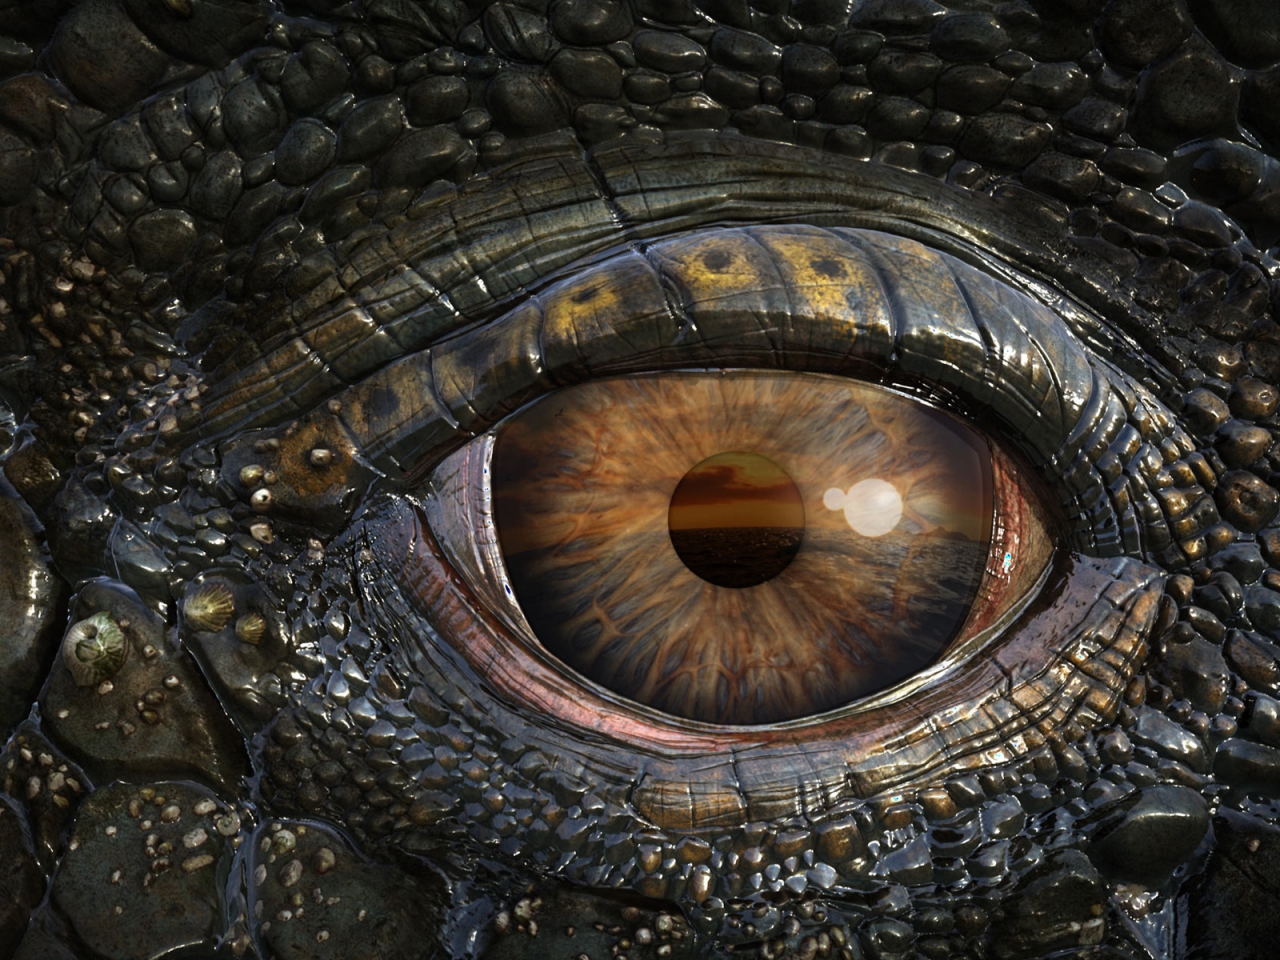 Mosasaur Eye for 1280 x 960 resolution